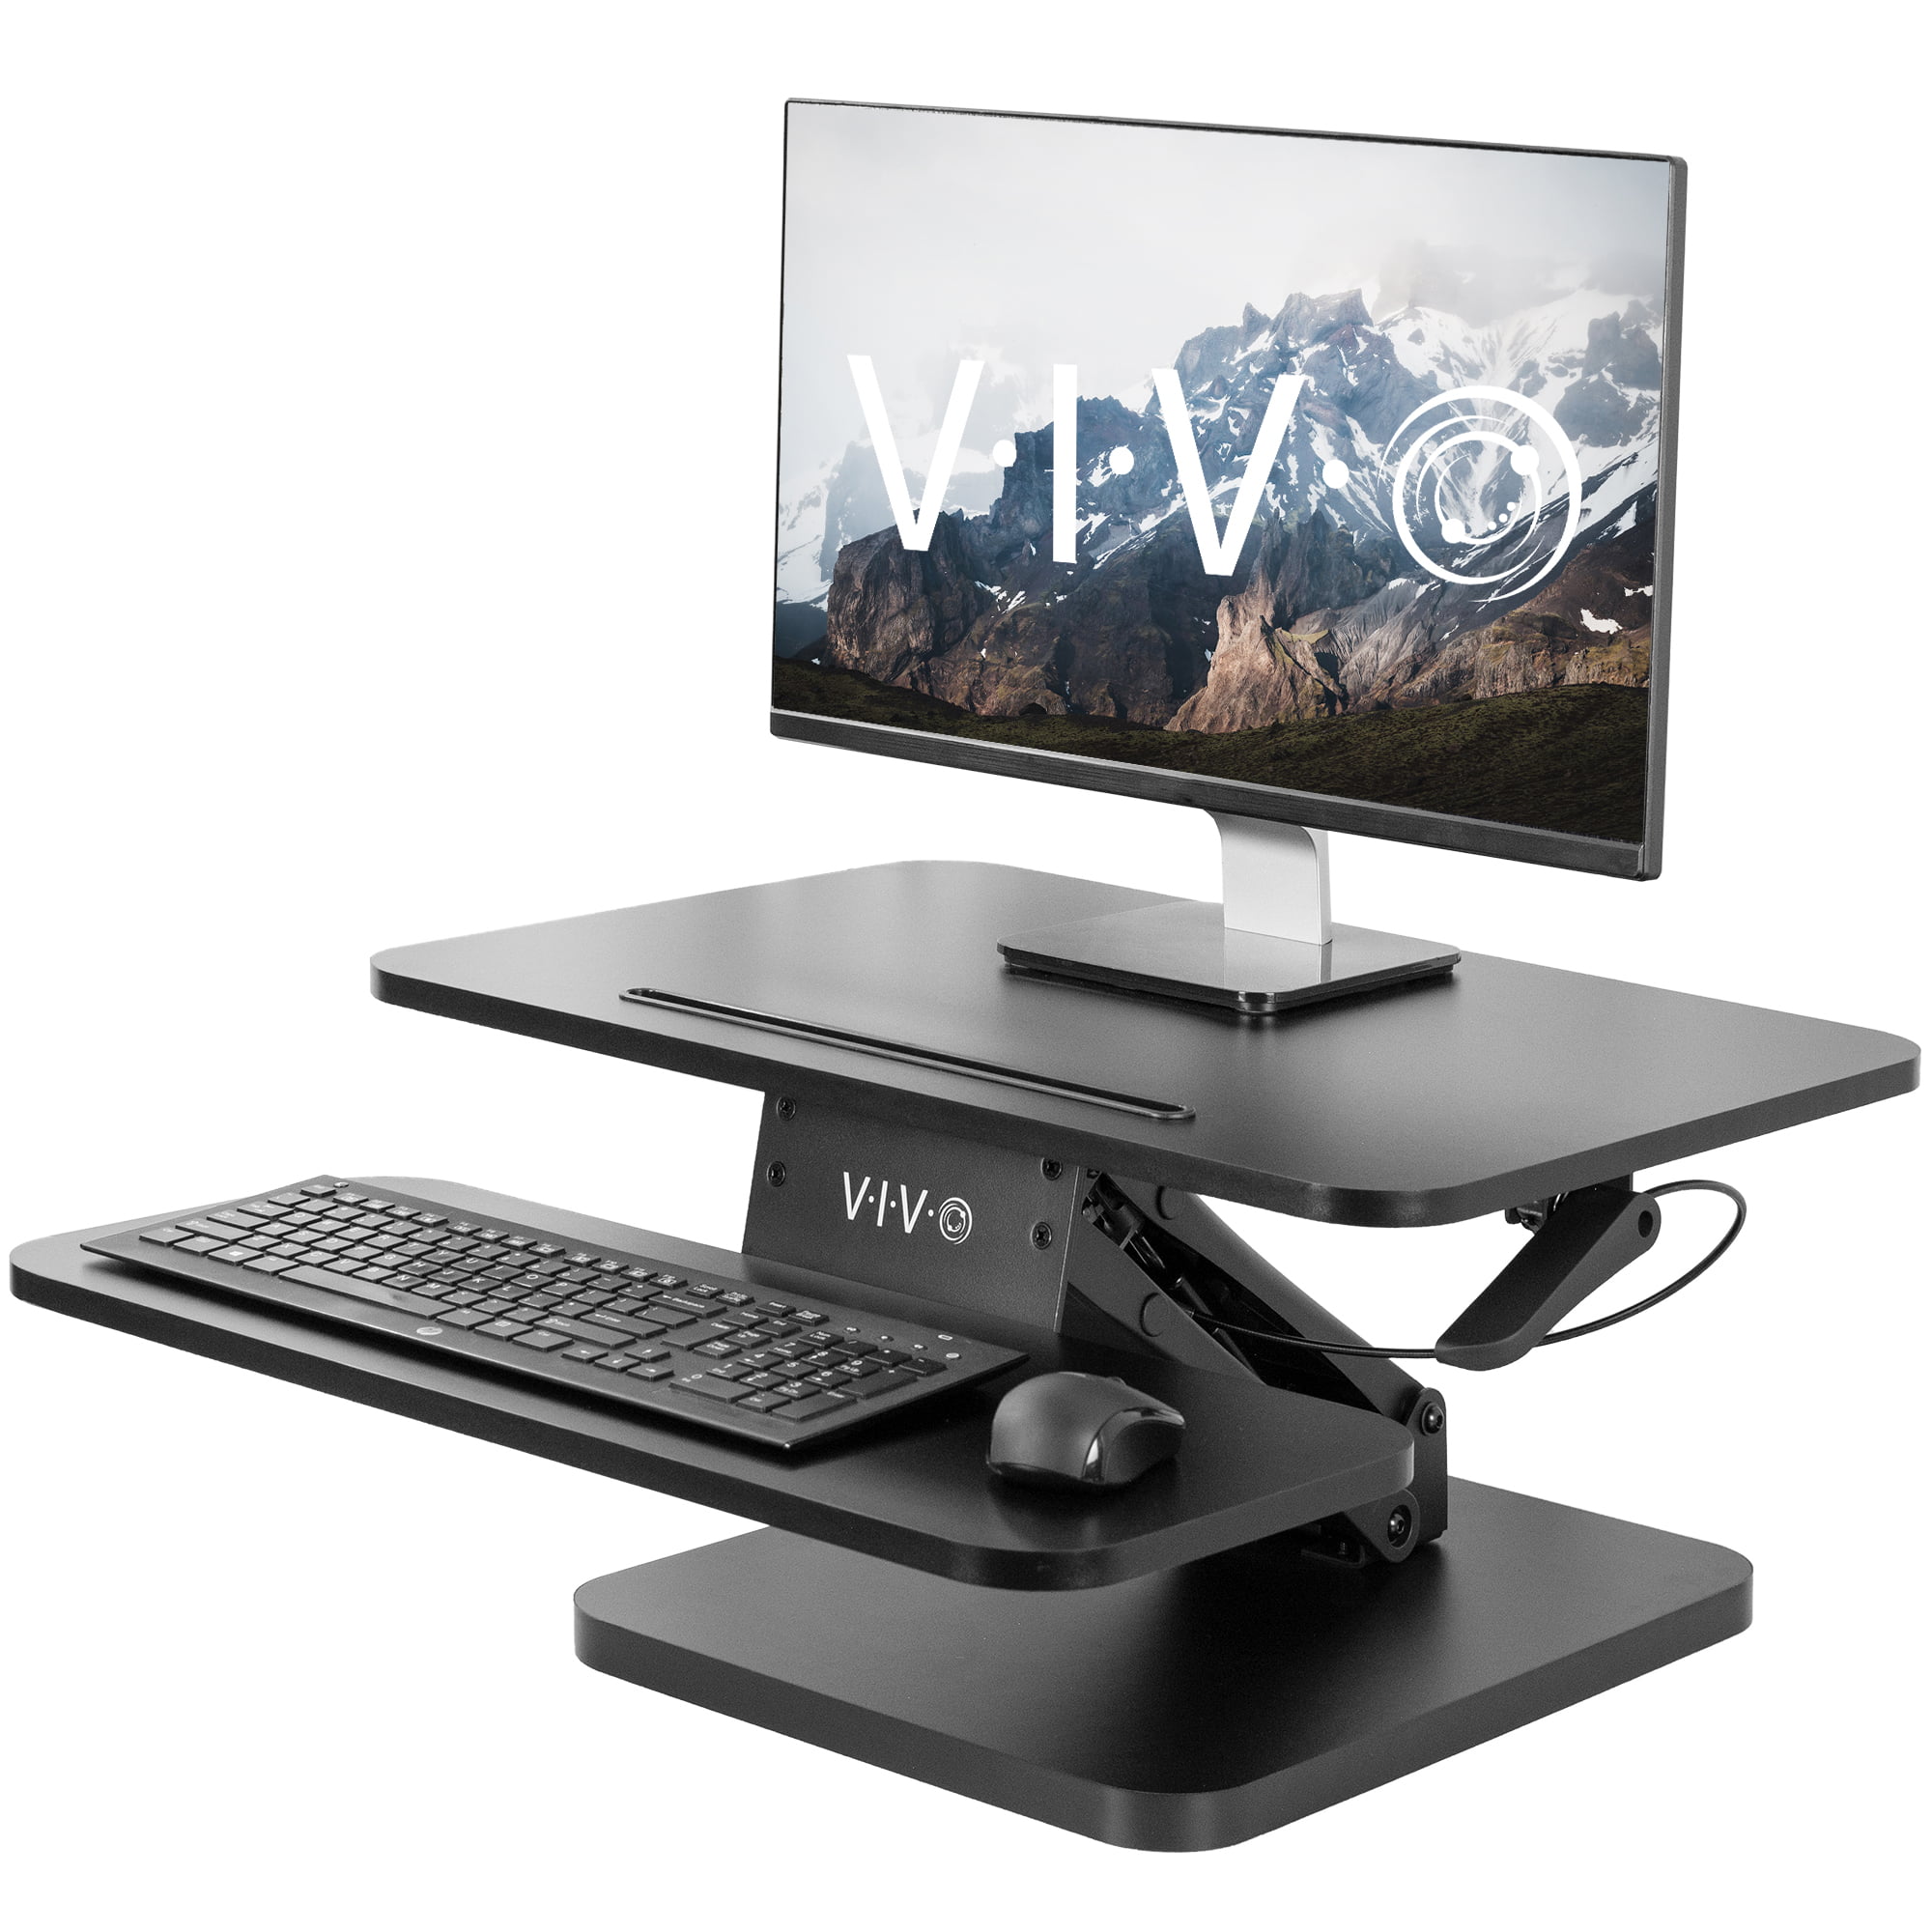 Vivo Small Height Adjustable Standing Desk Gas Spring Monitor Riser 25 Tabletop Sit To Stand Workstation Desk V001g Walmart Com Walmart Com